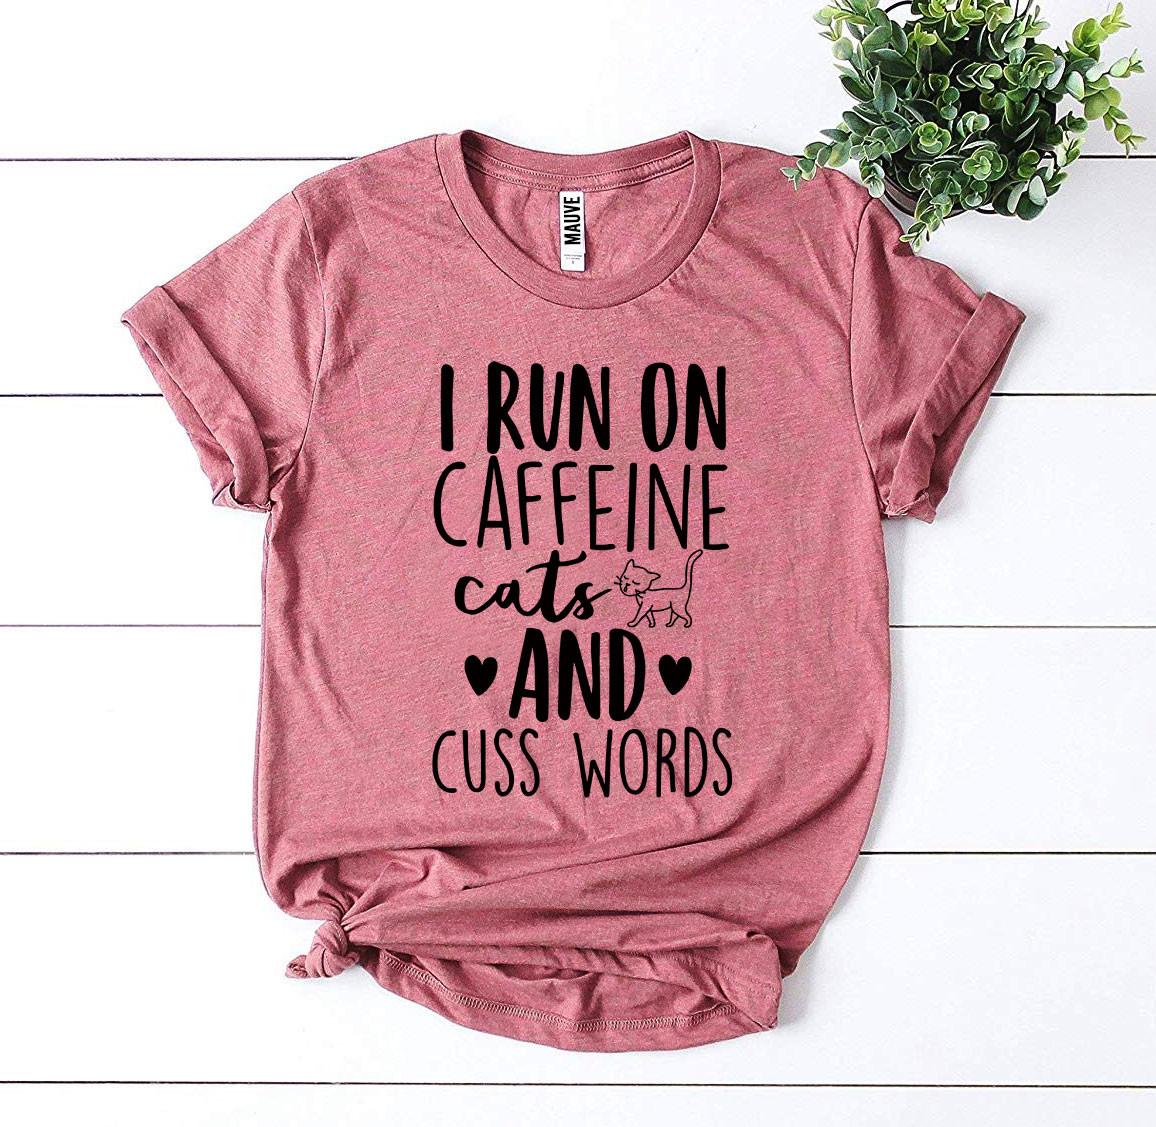 I Run on Caffeine Cats and Cuss Words T-Shirt